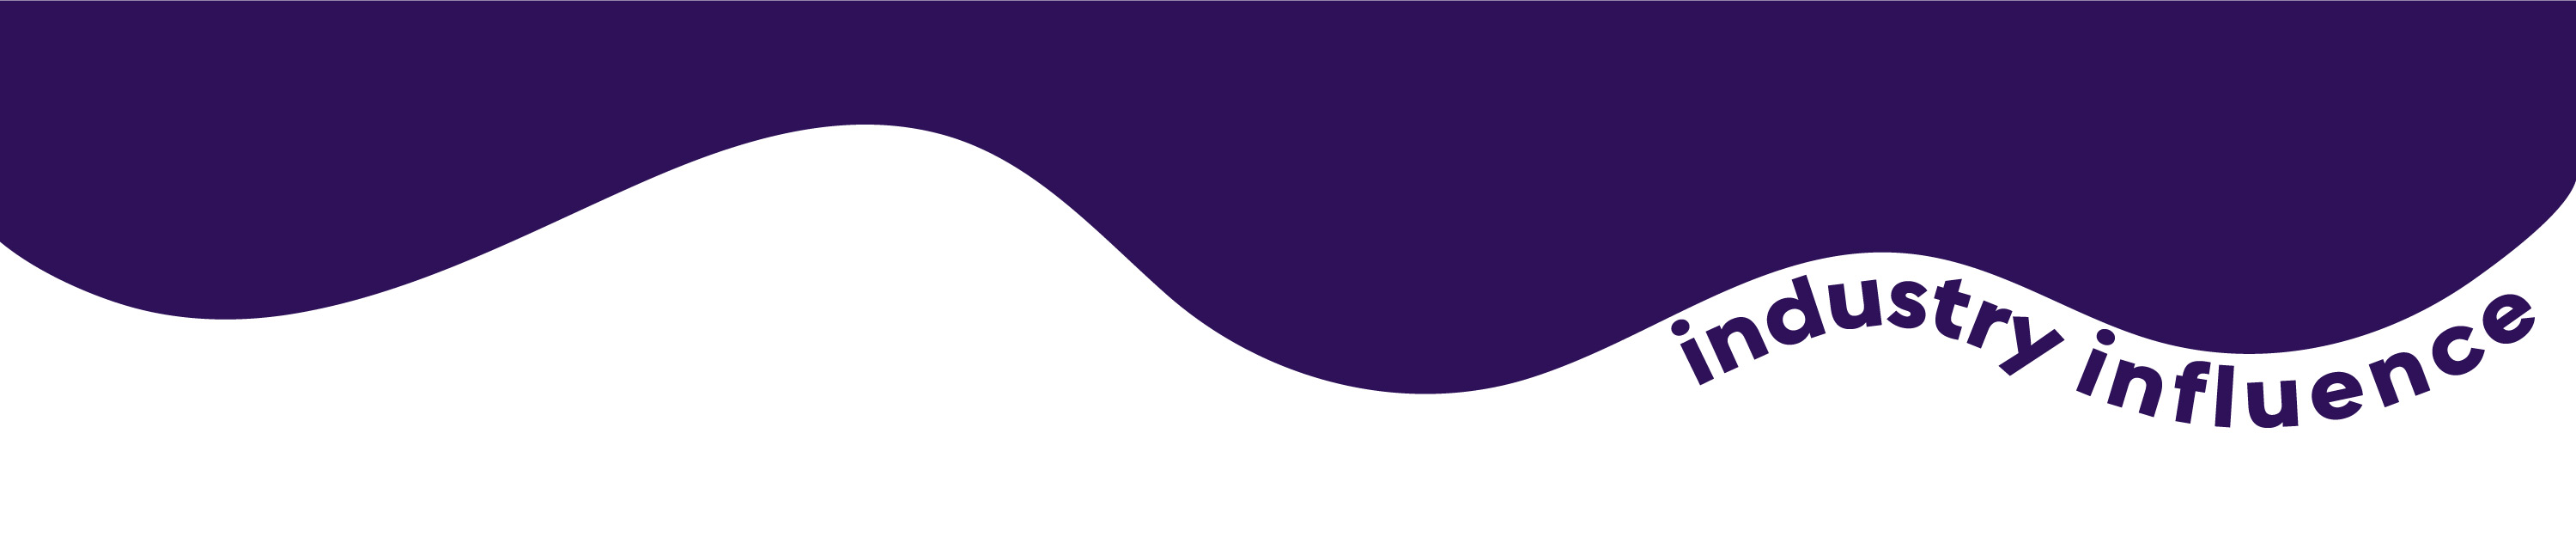 purple-wave-bg-digital-marketing-campaigns-strend